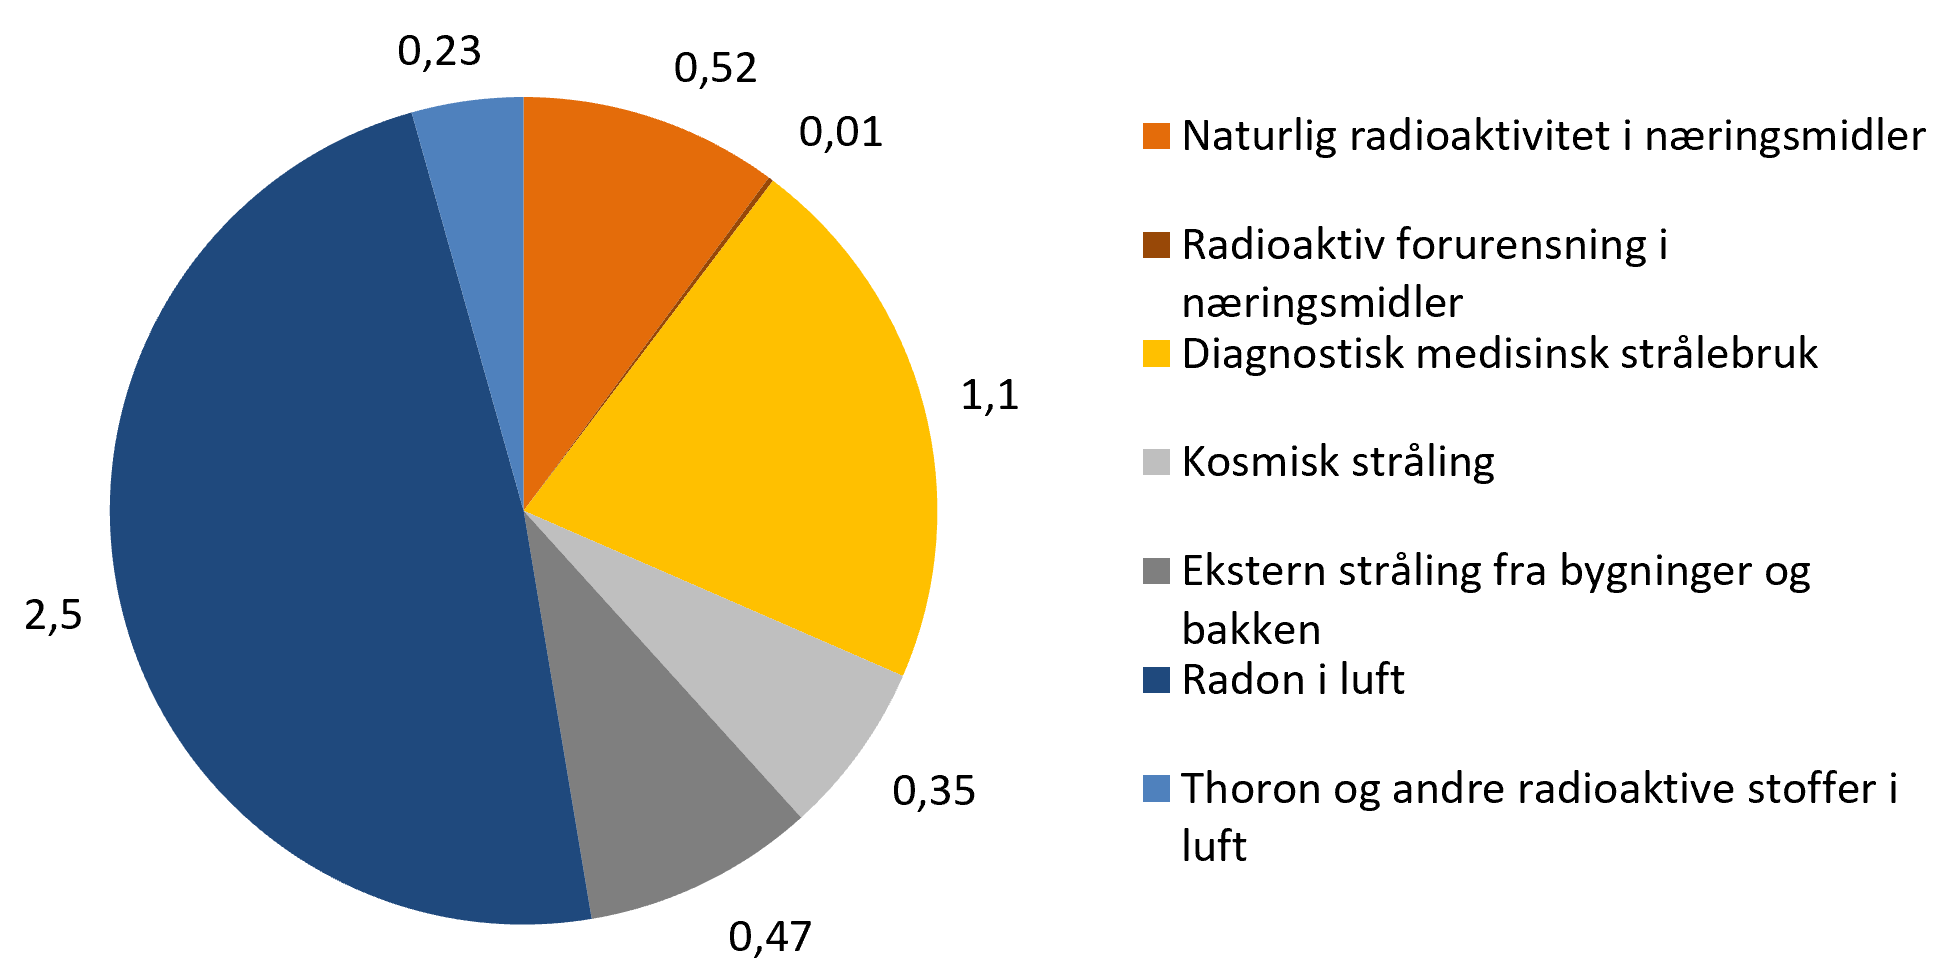 Bidrag til årlig stråledose (5,2 mSv/år) fra forskjellige kilder til ioniserende stråling for en gjennomsnittsperson i Norge. Kilde: Statens strålevern, 2015